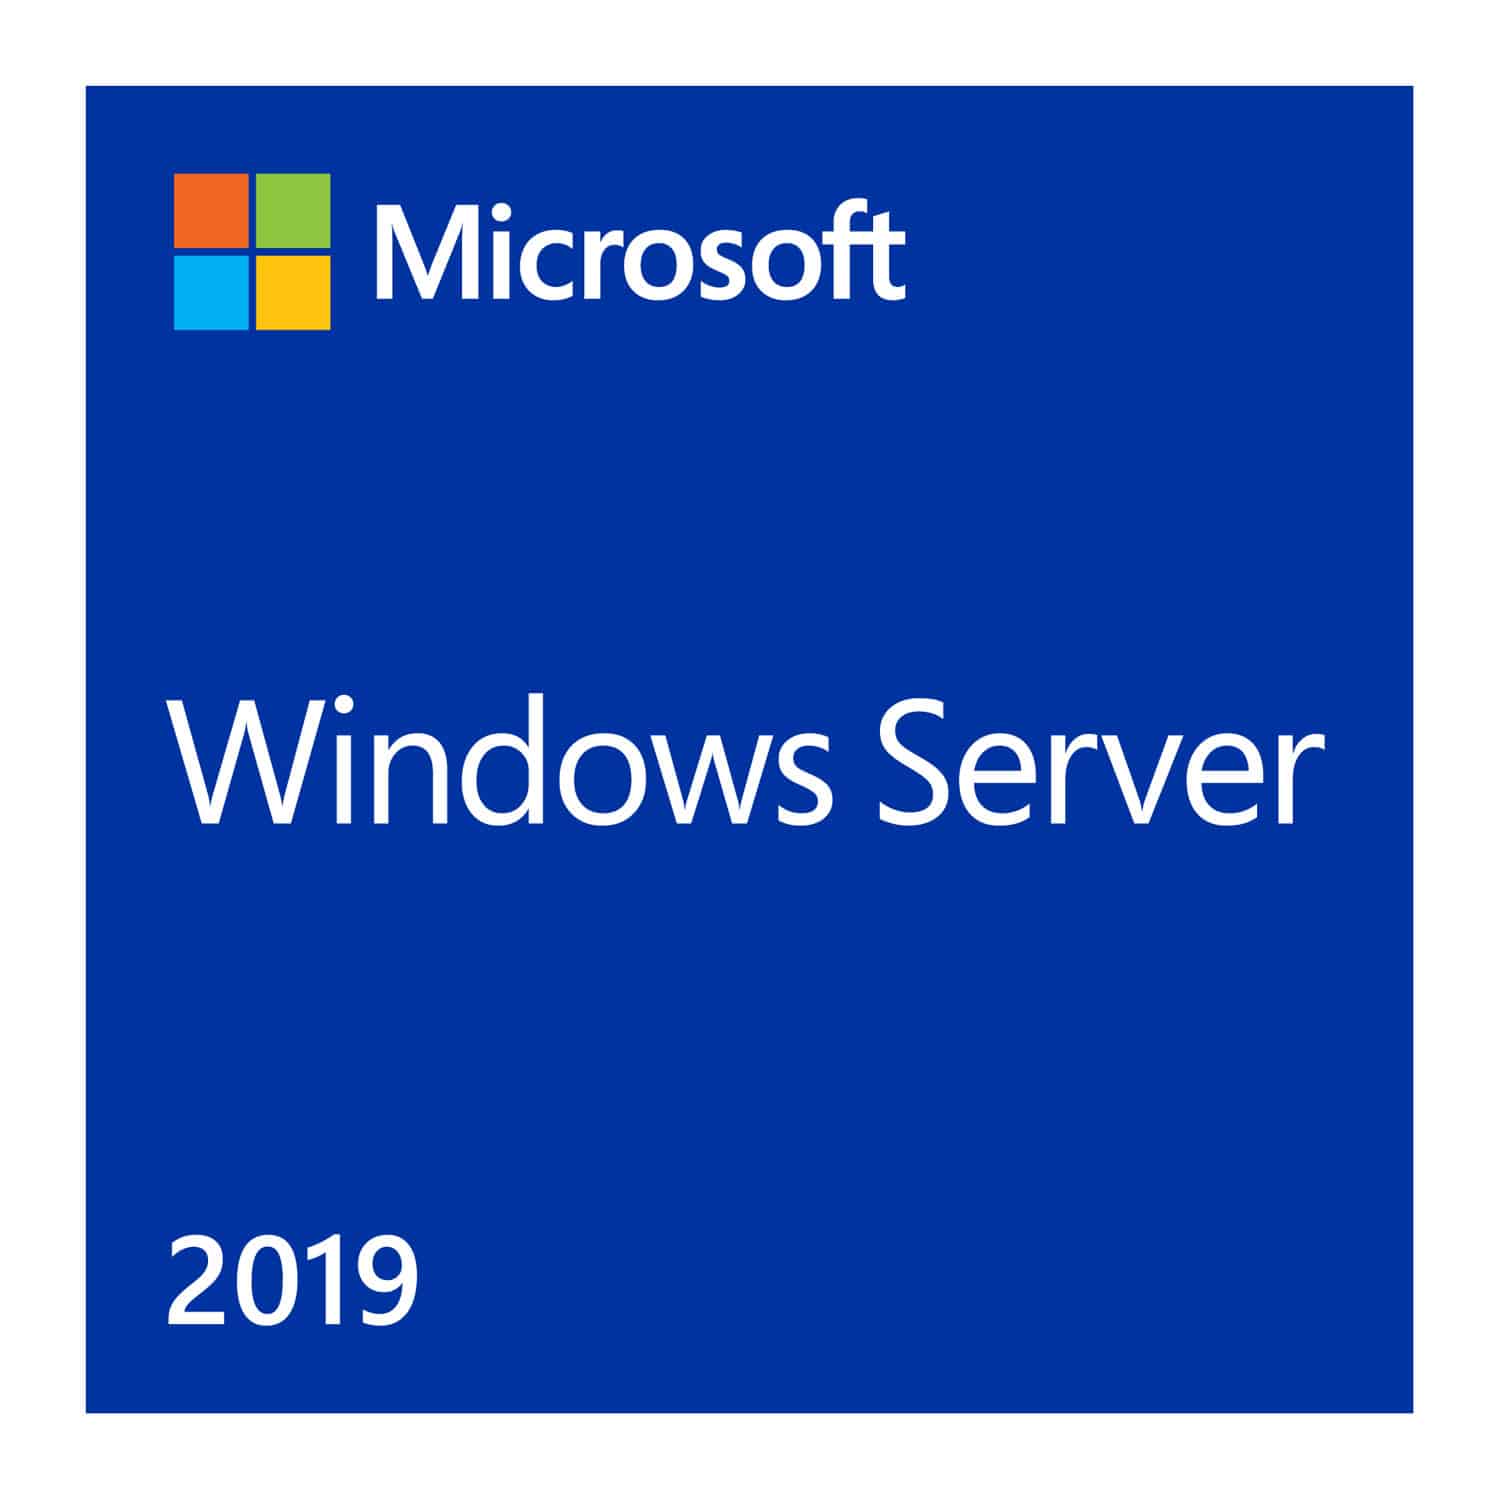 Windows Server 20193r0mX5JekLvMq